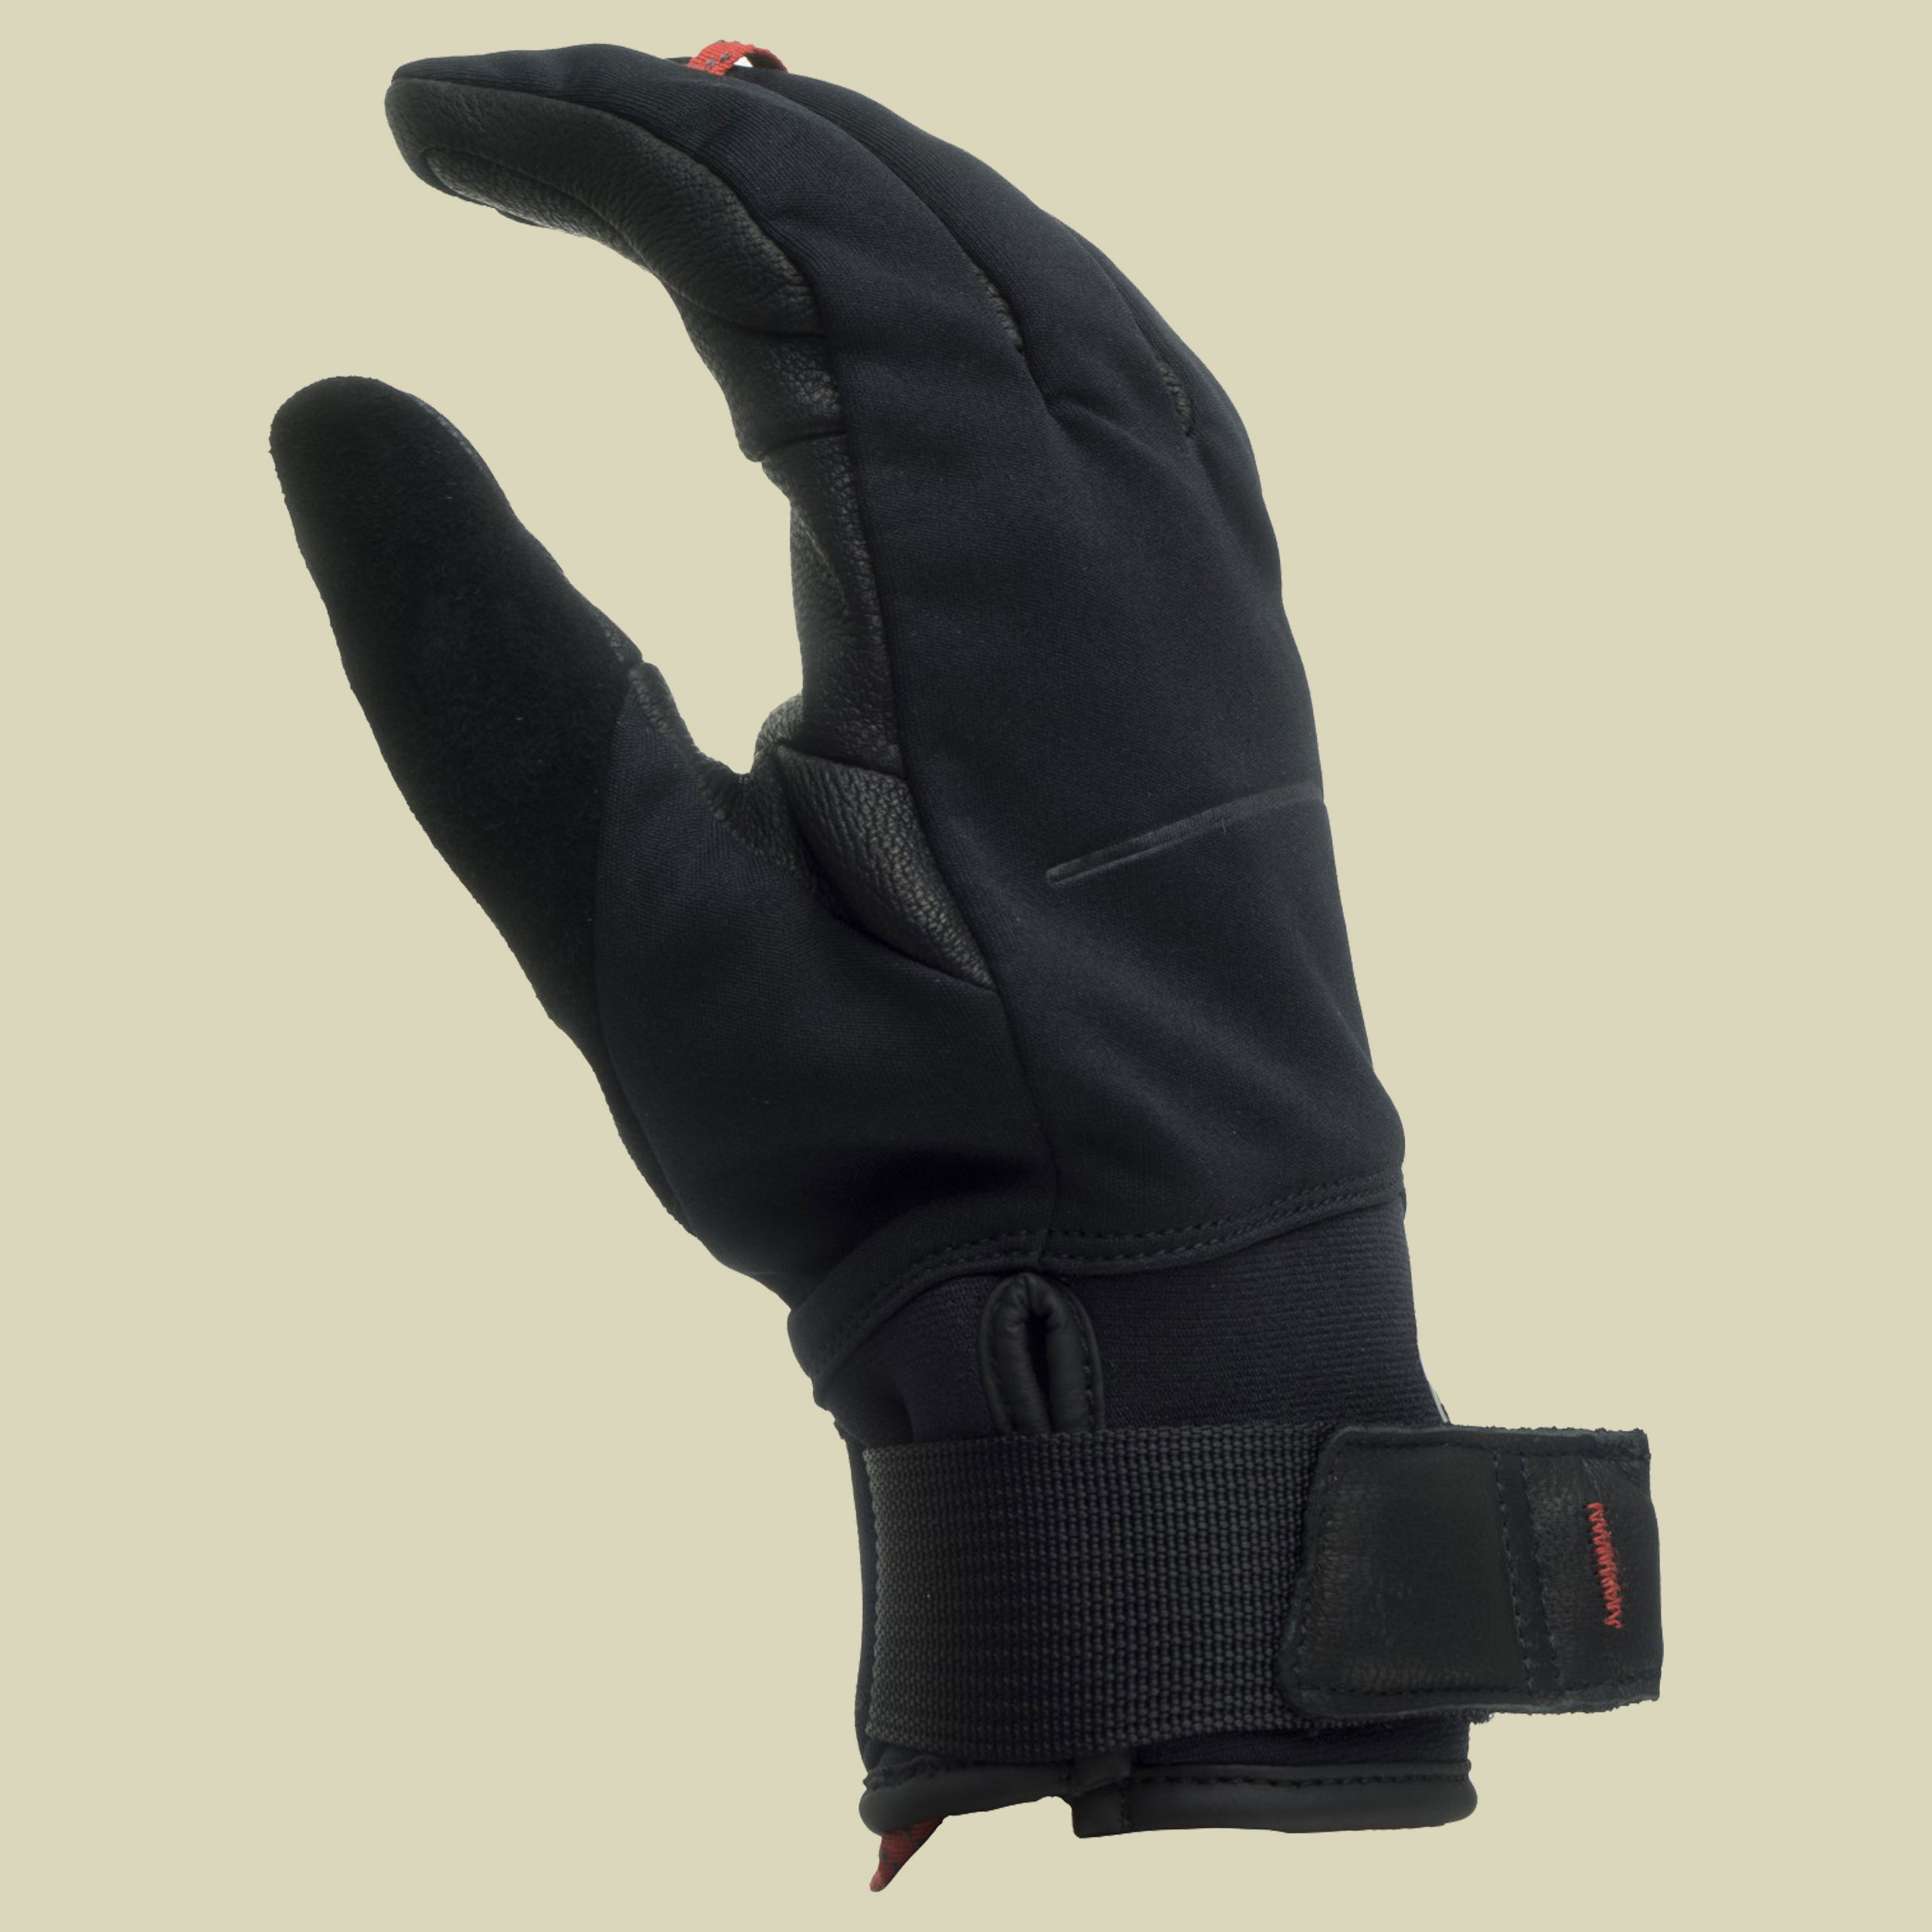 Astro Guide Glove Größe 11 Farbe black